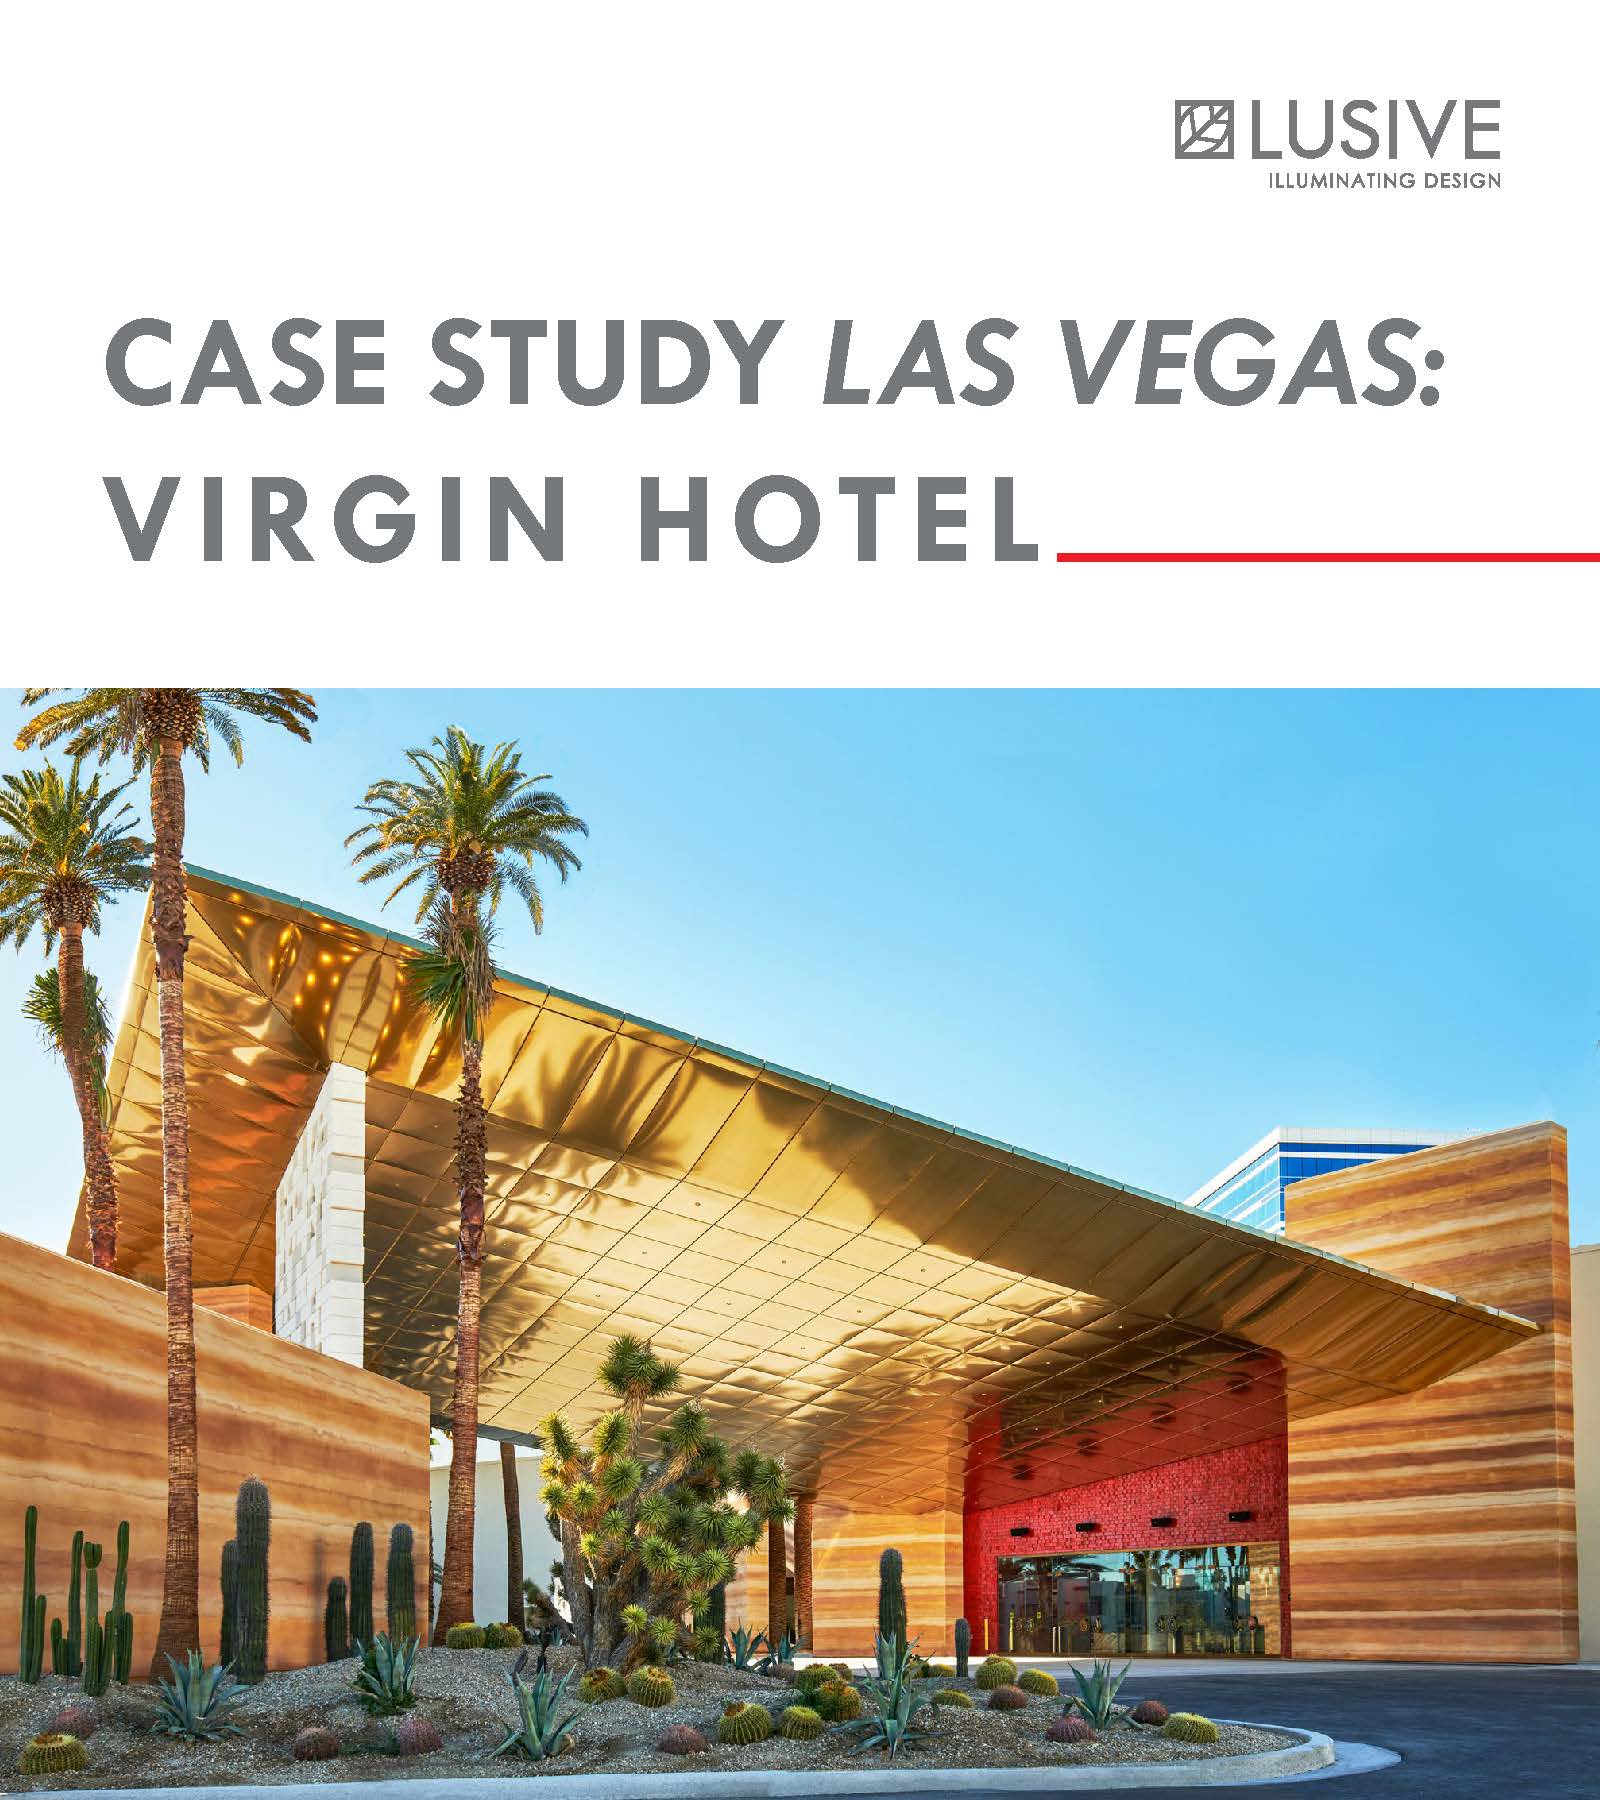 The Virgin Hotel, Las Vegas